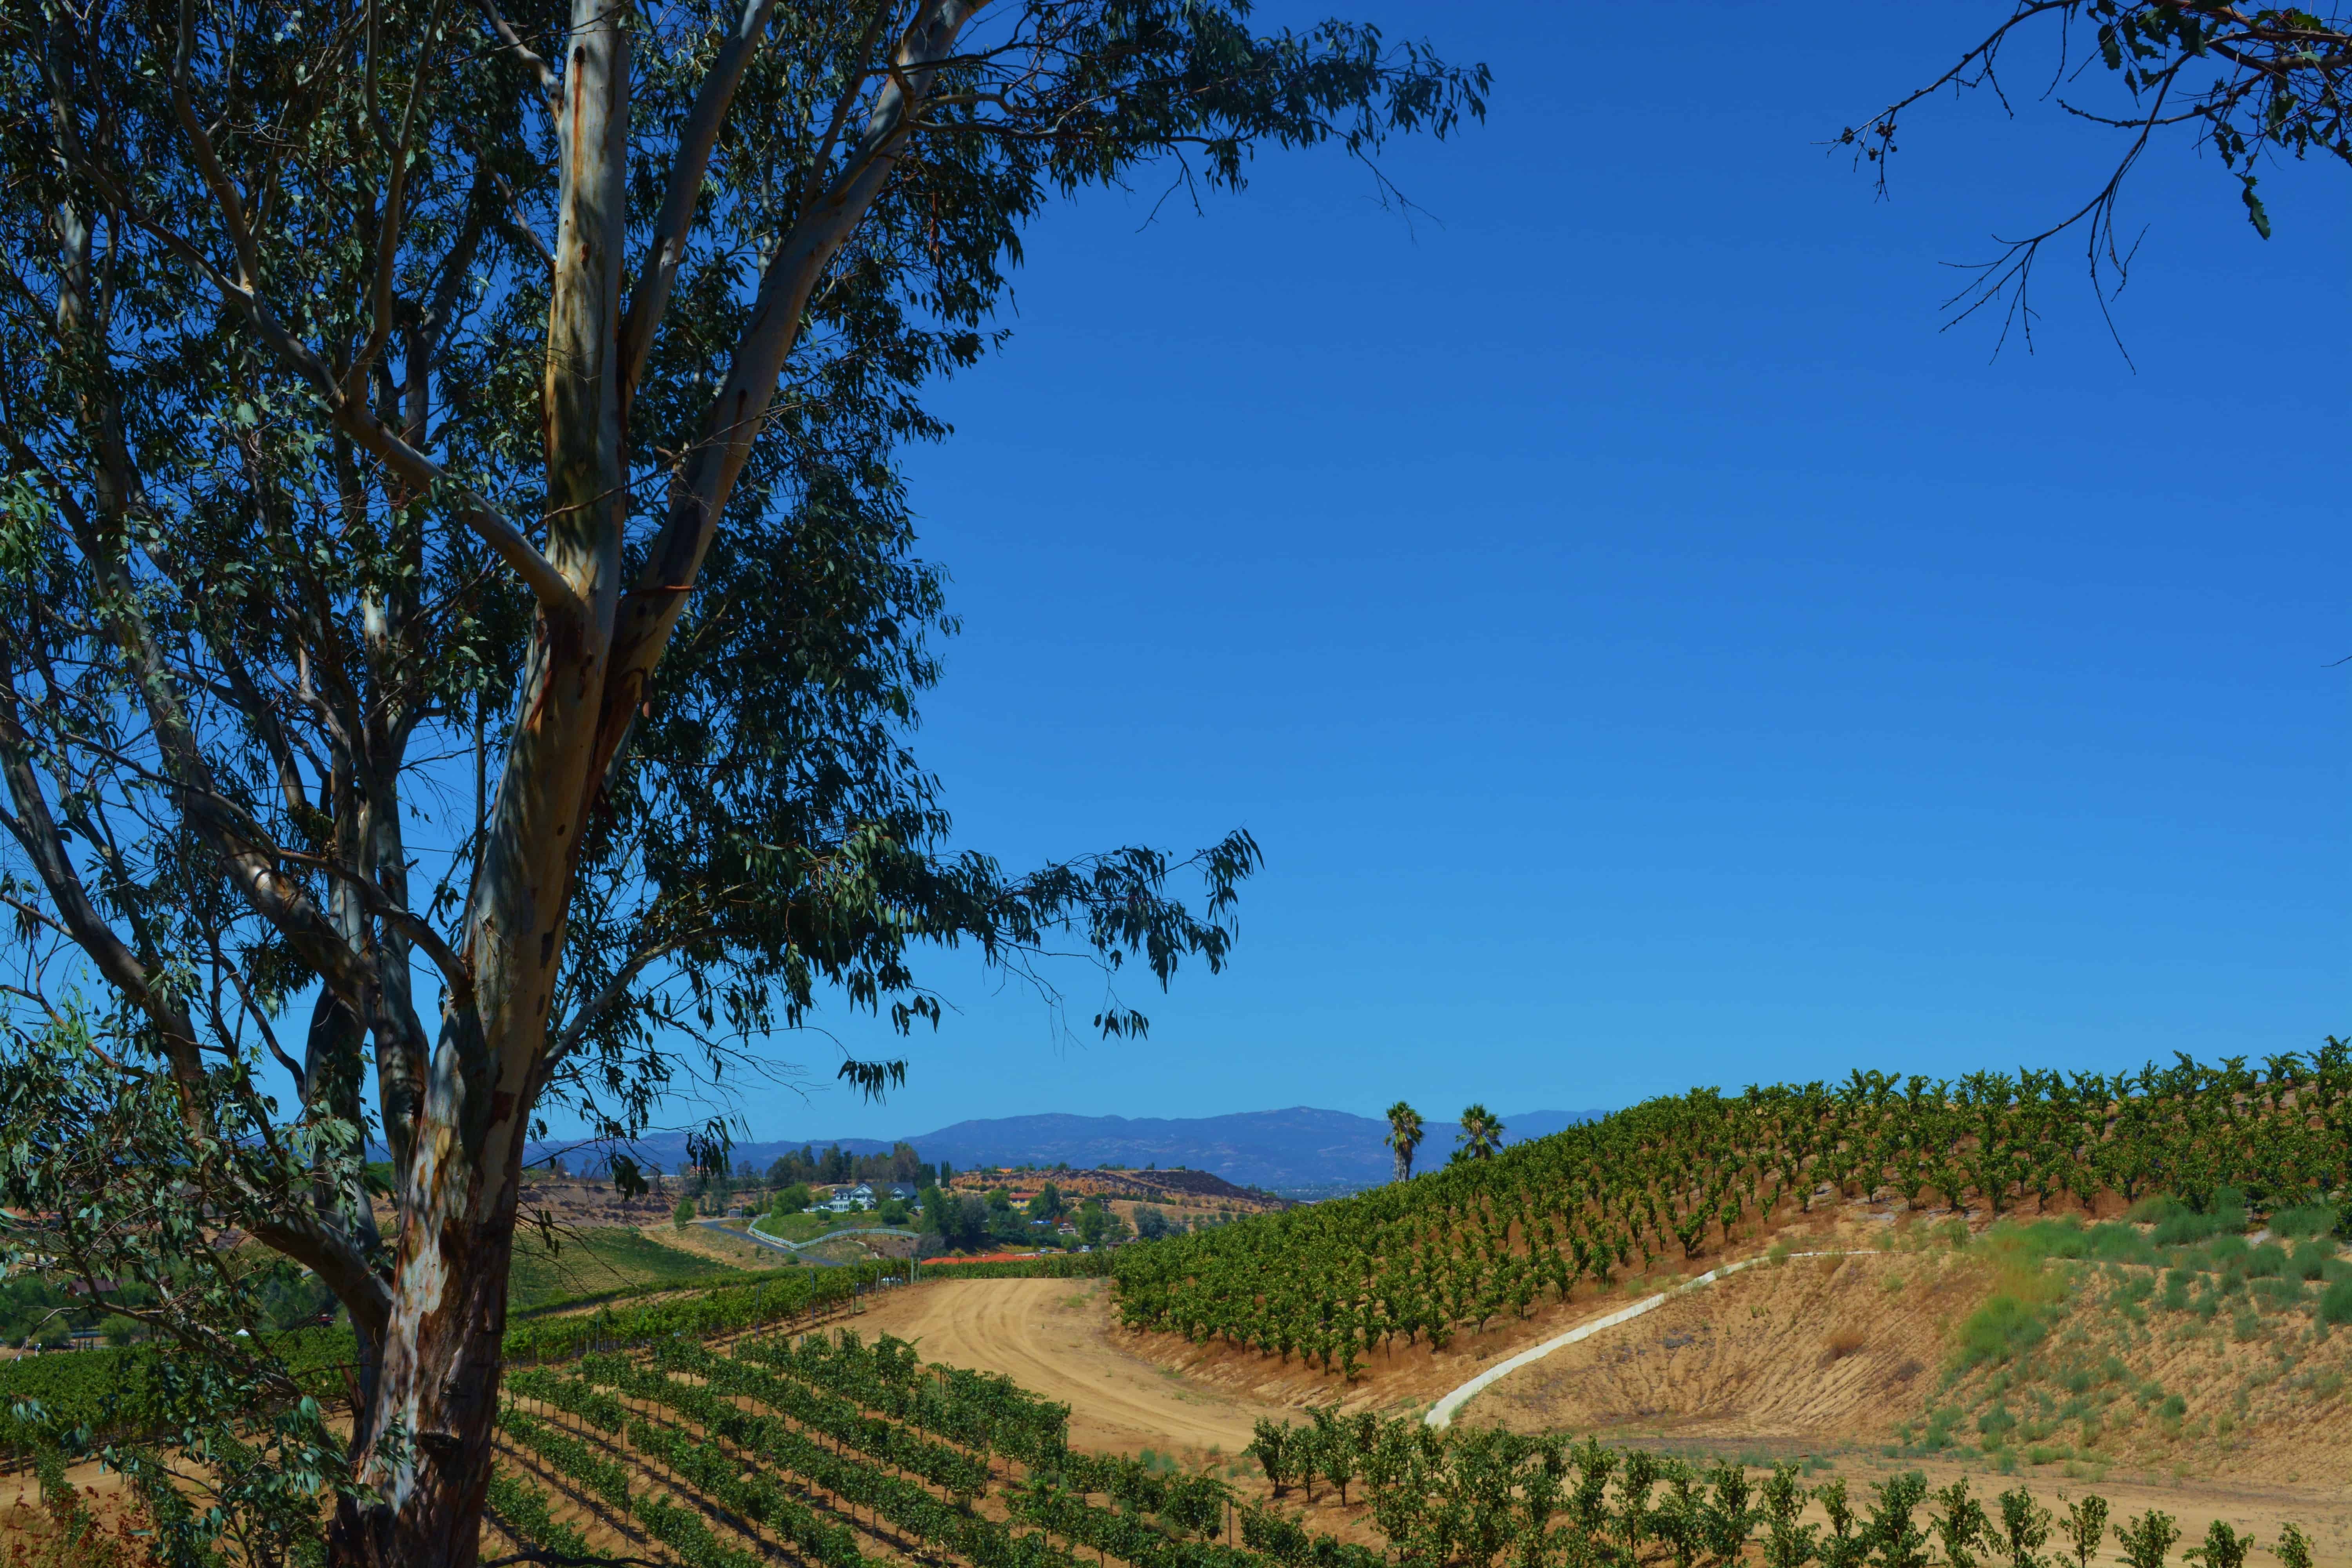 Vineyard Views from Falkner Winery